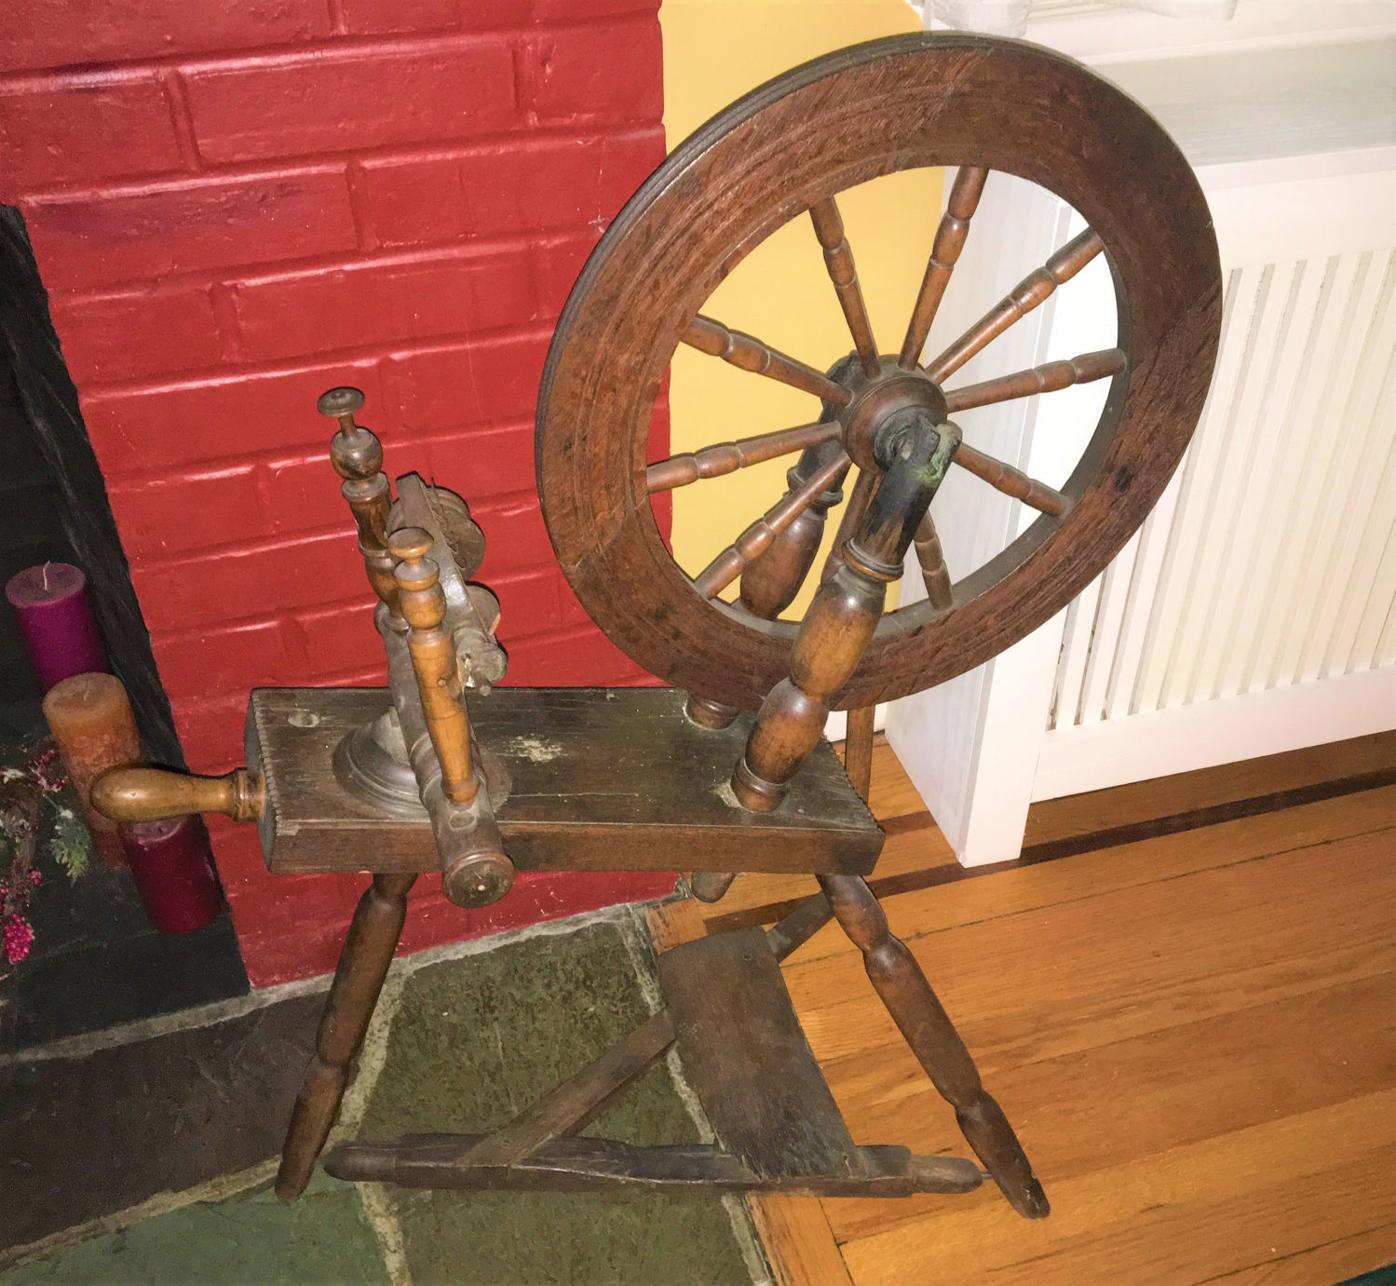 Premium Photo  Old fashioned wooden spinning wheels, vintage yarn making  equipment